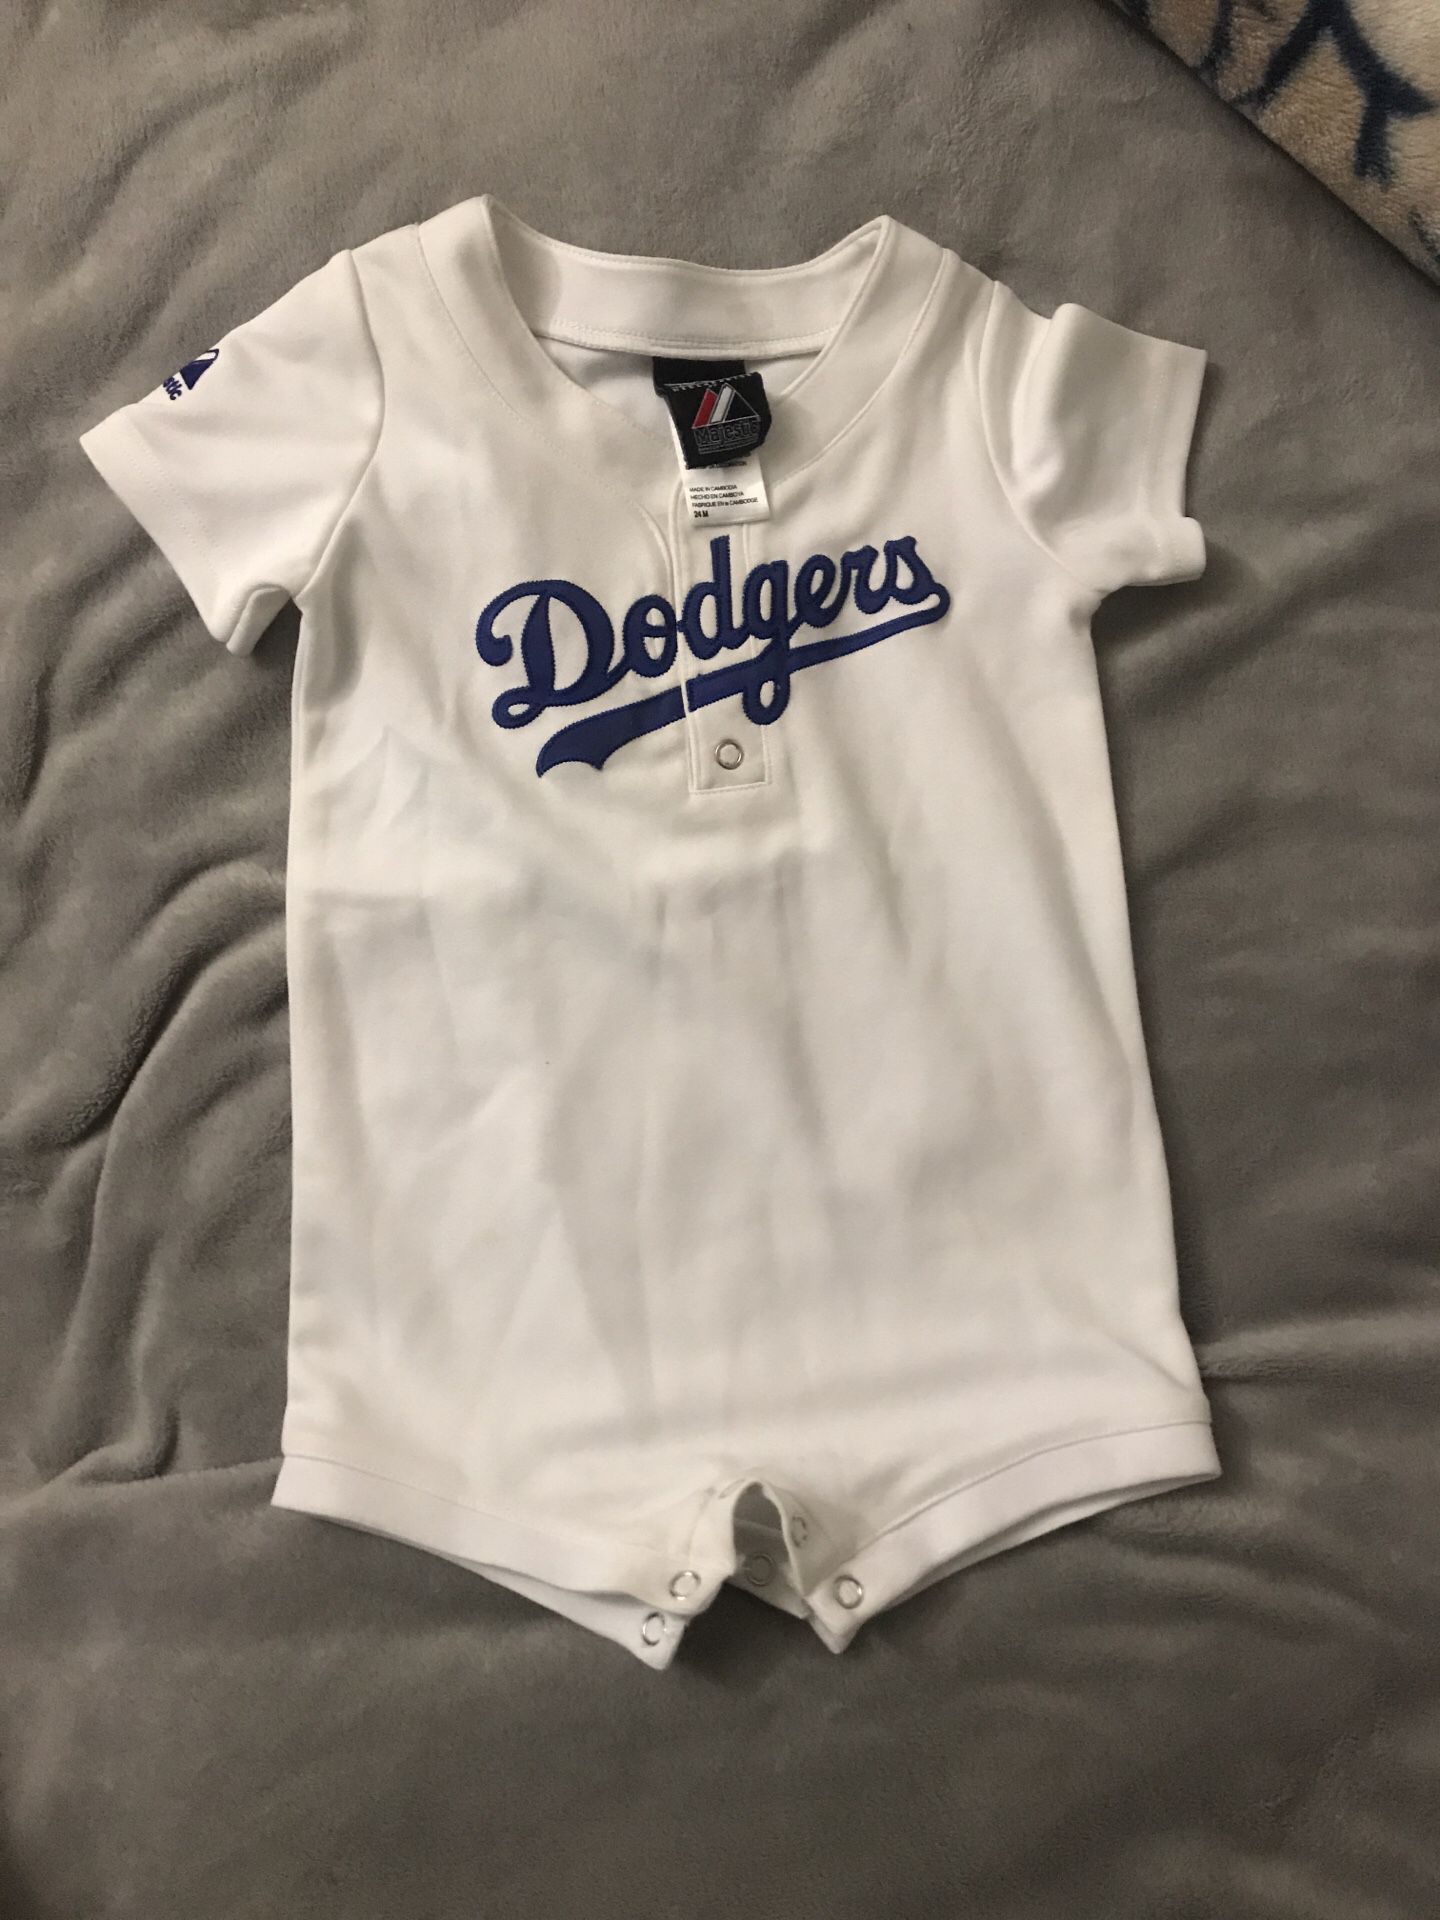 Dodgers jersey onesie for 24m baby for Sale in Ontario, CA - OfferUp